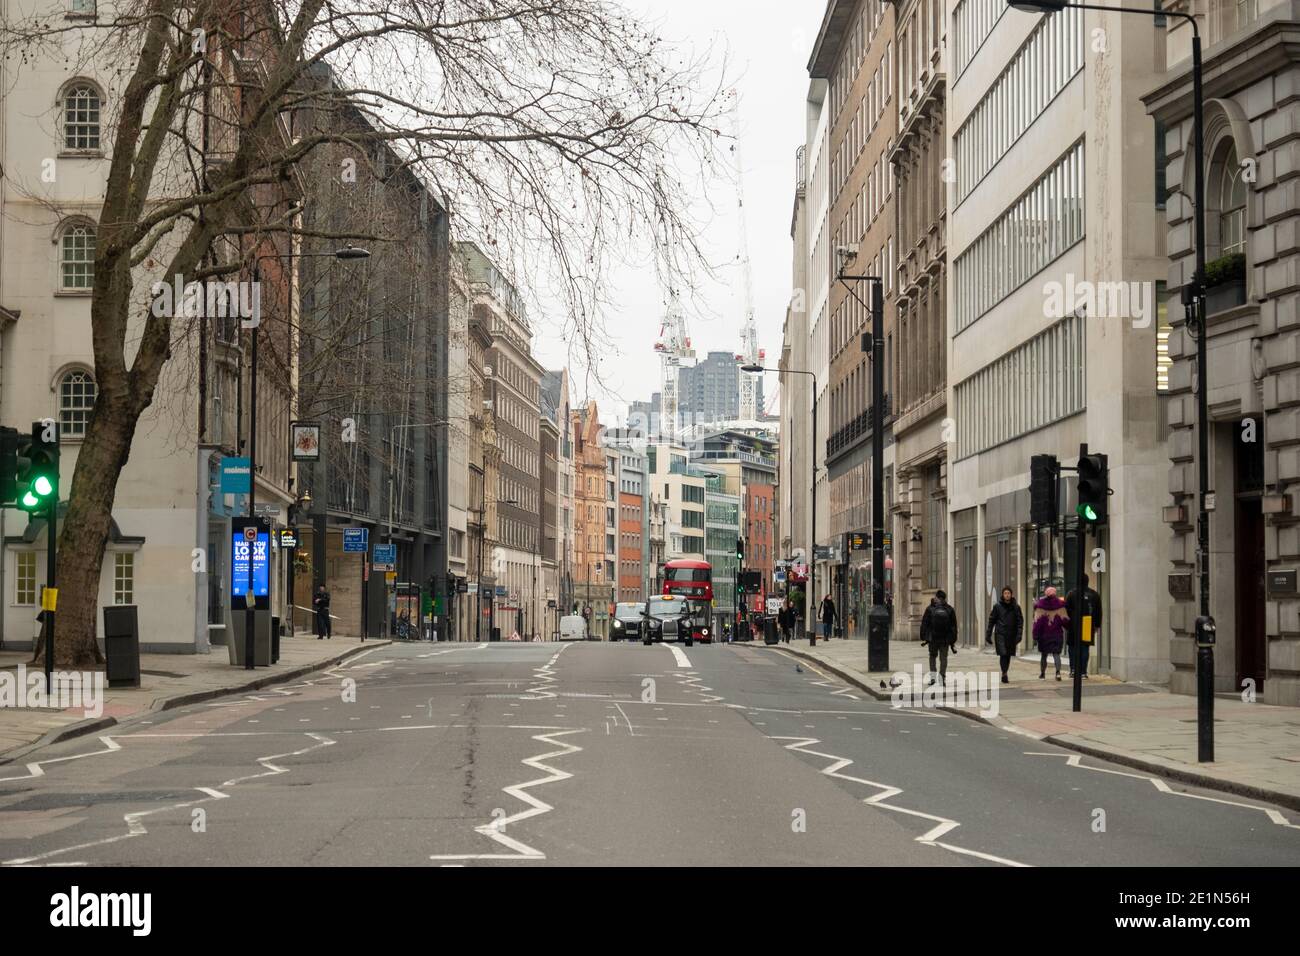 London- High Holborn, a landmark city of London road empty due to the Covid 19 lockdown Stock Photo